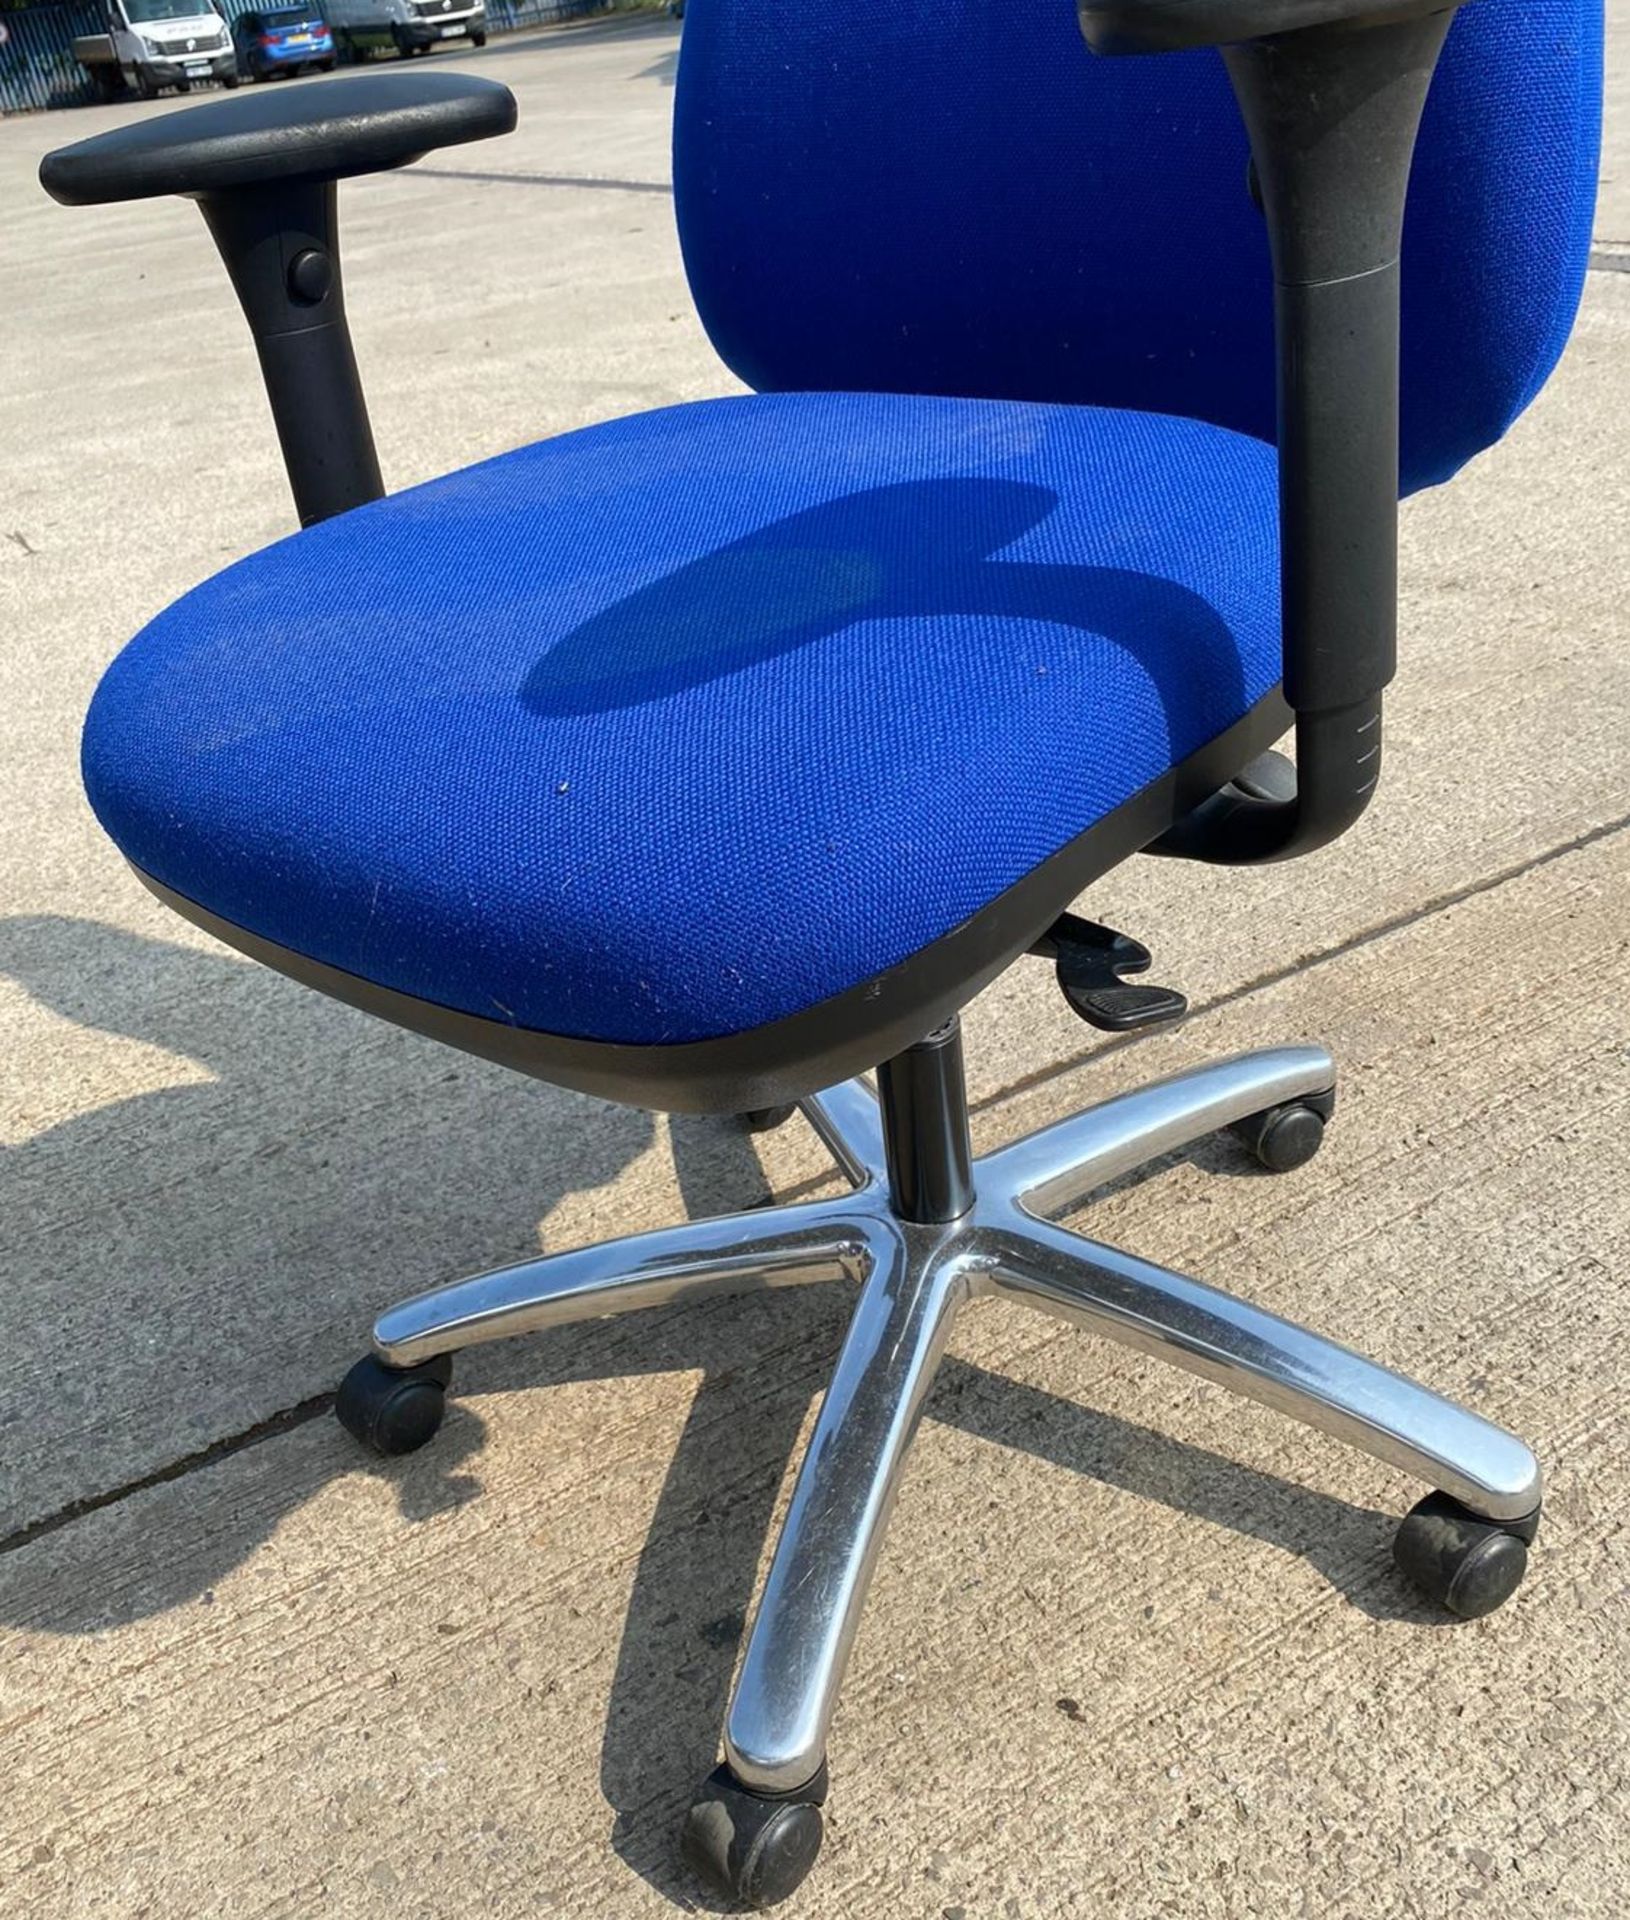 1 x Status Therapod 5250 Chair in Blue - Used Condition - Location: Altrincham WA14 - Image 8 of 10